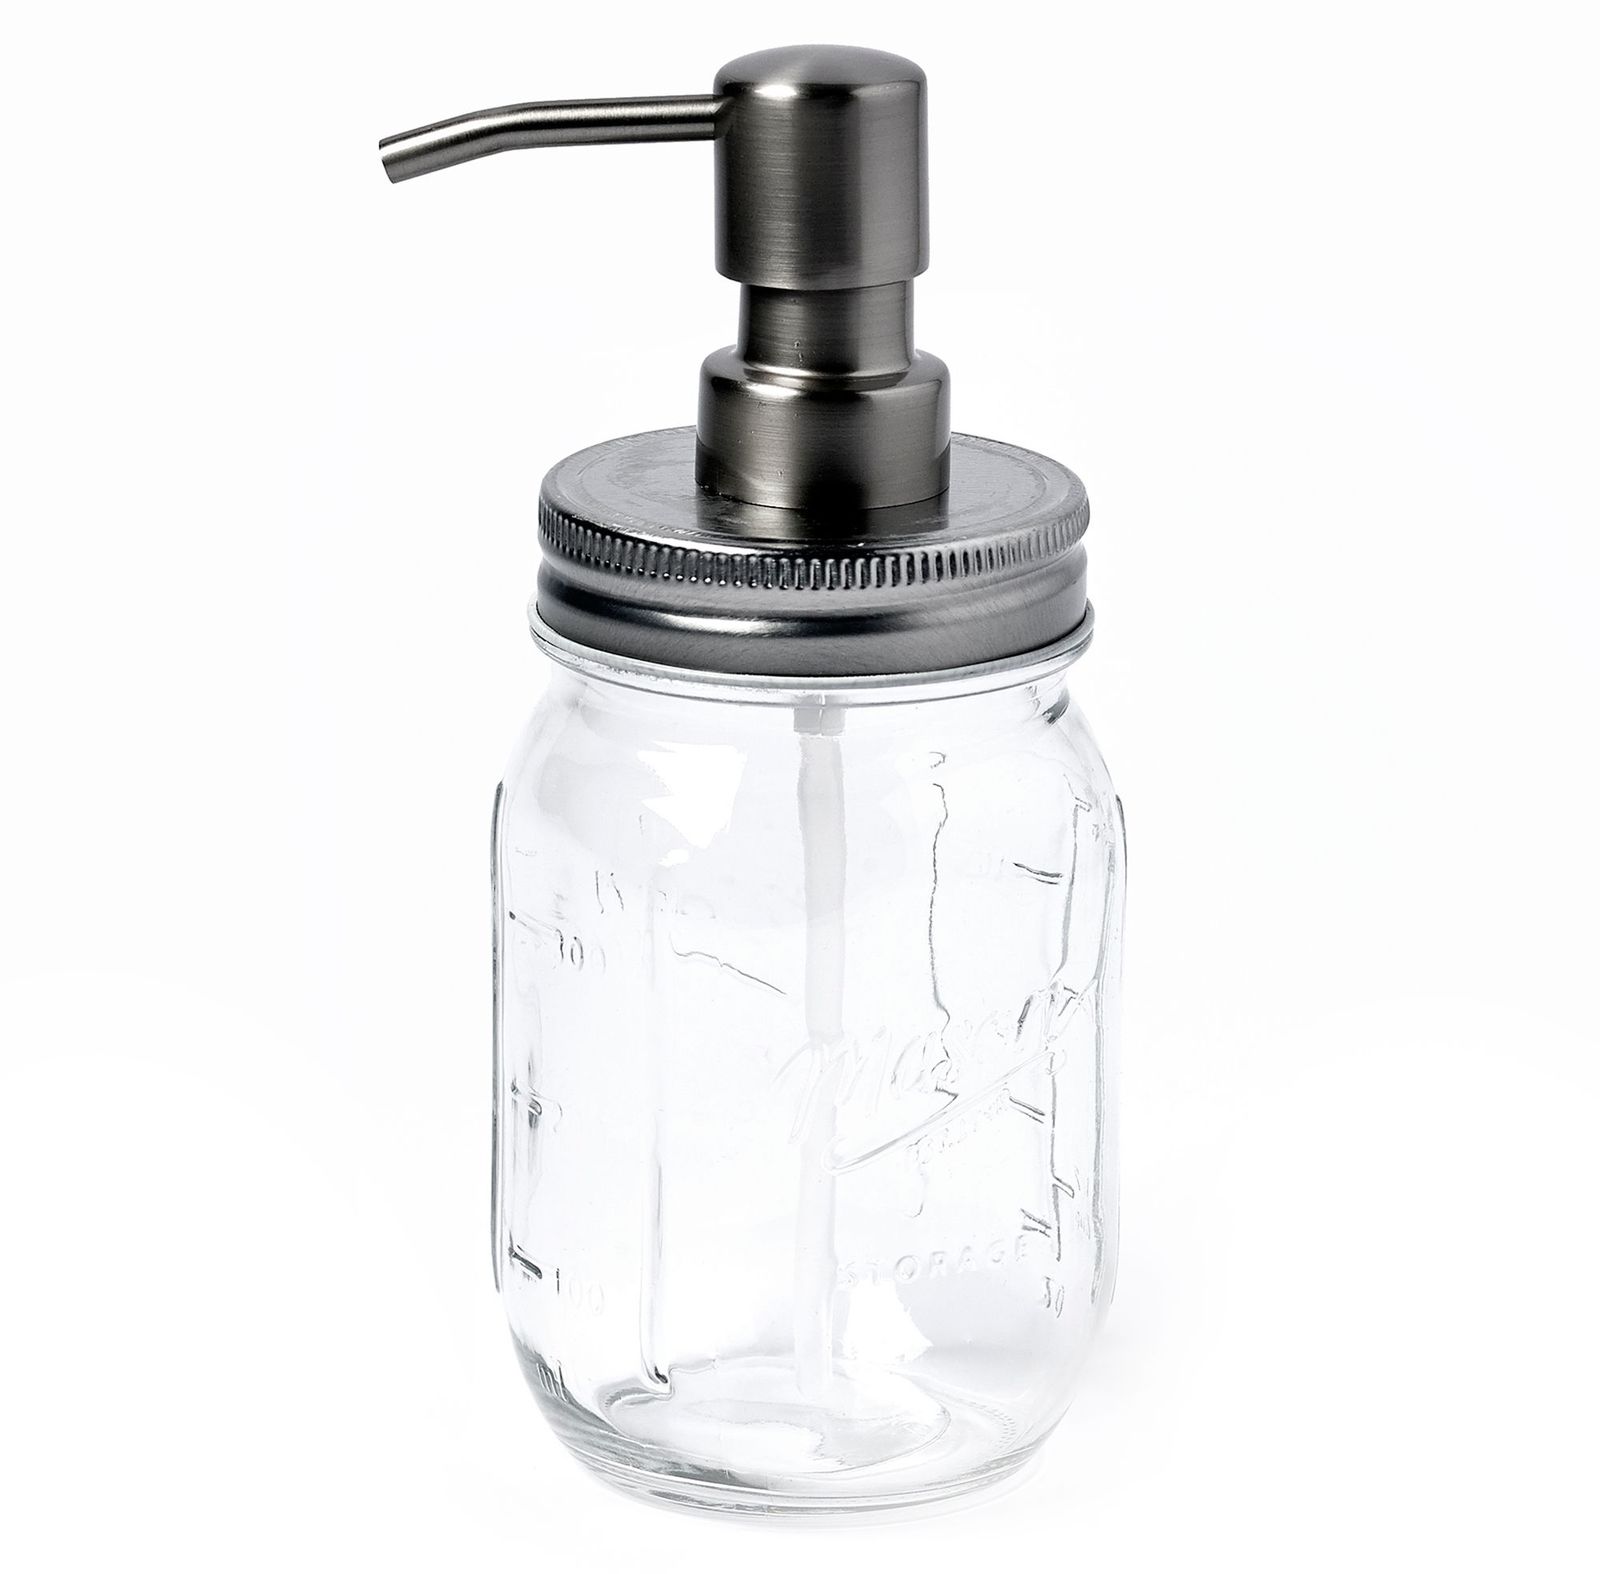 Vintage style Glass Jar Liquid Soap Midget Mason Jar Counter Foam Dispenser Pump